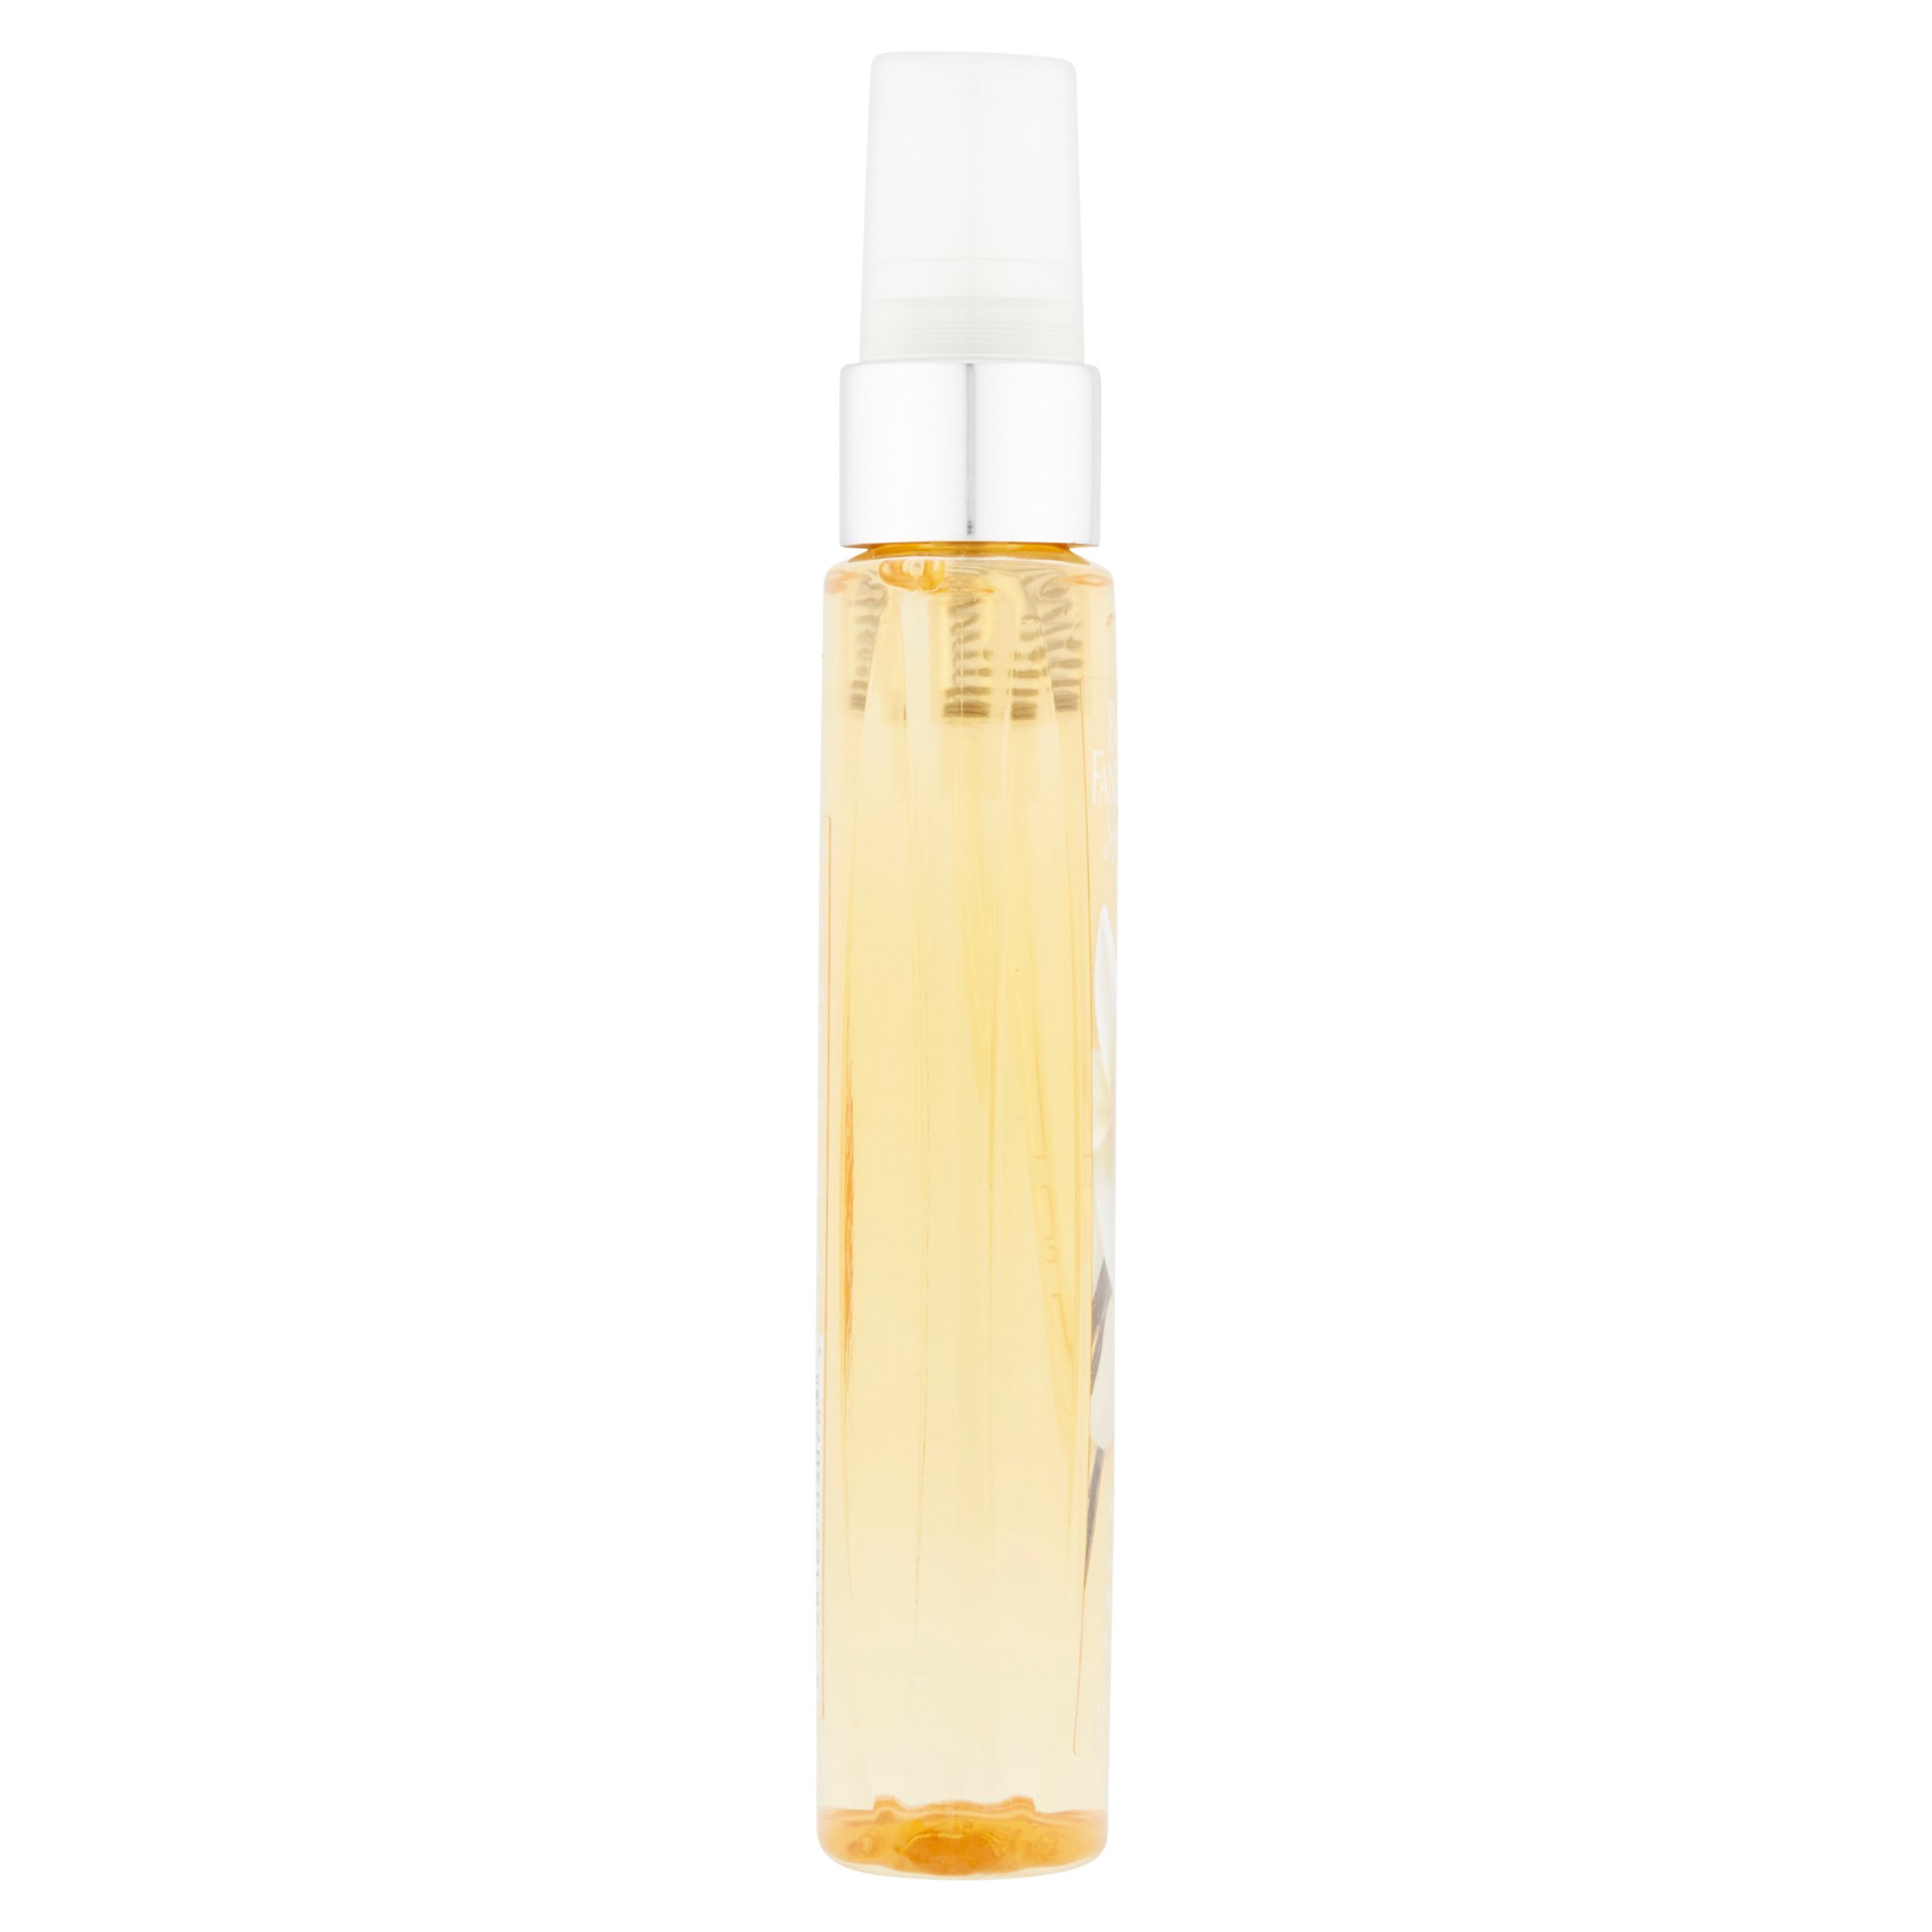 Body Fantasies Signature Fragrance Body Spray, Vanilla, 3.2 fl oz - image 2 of 5